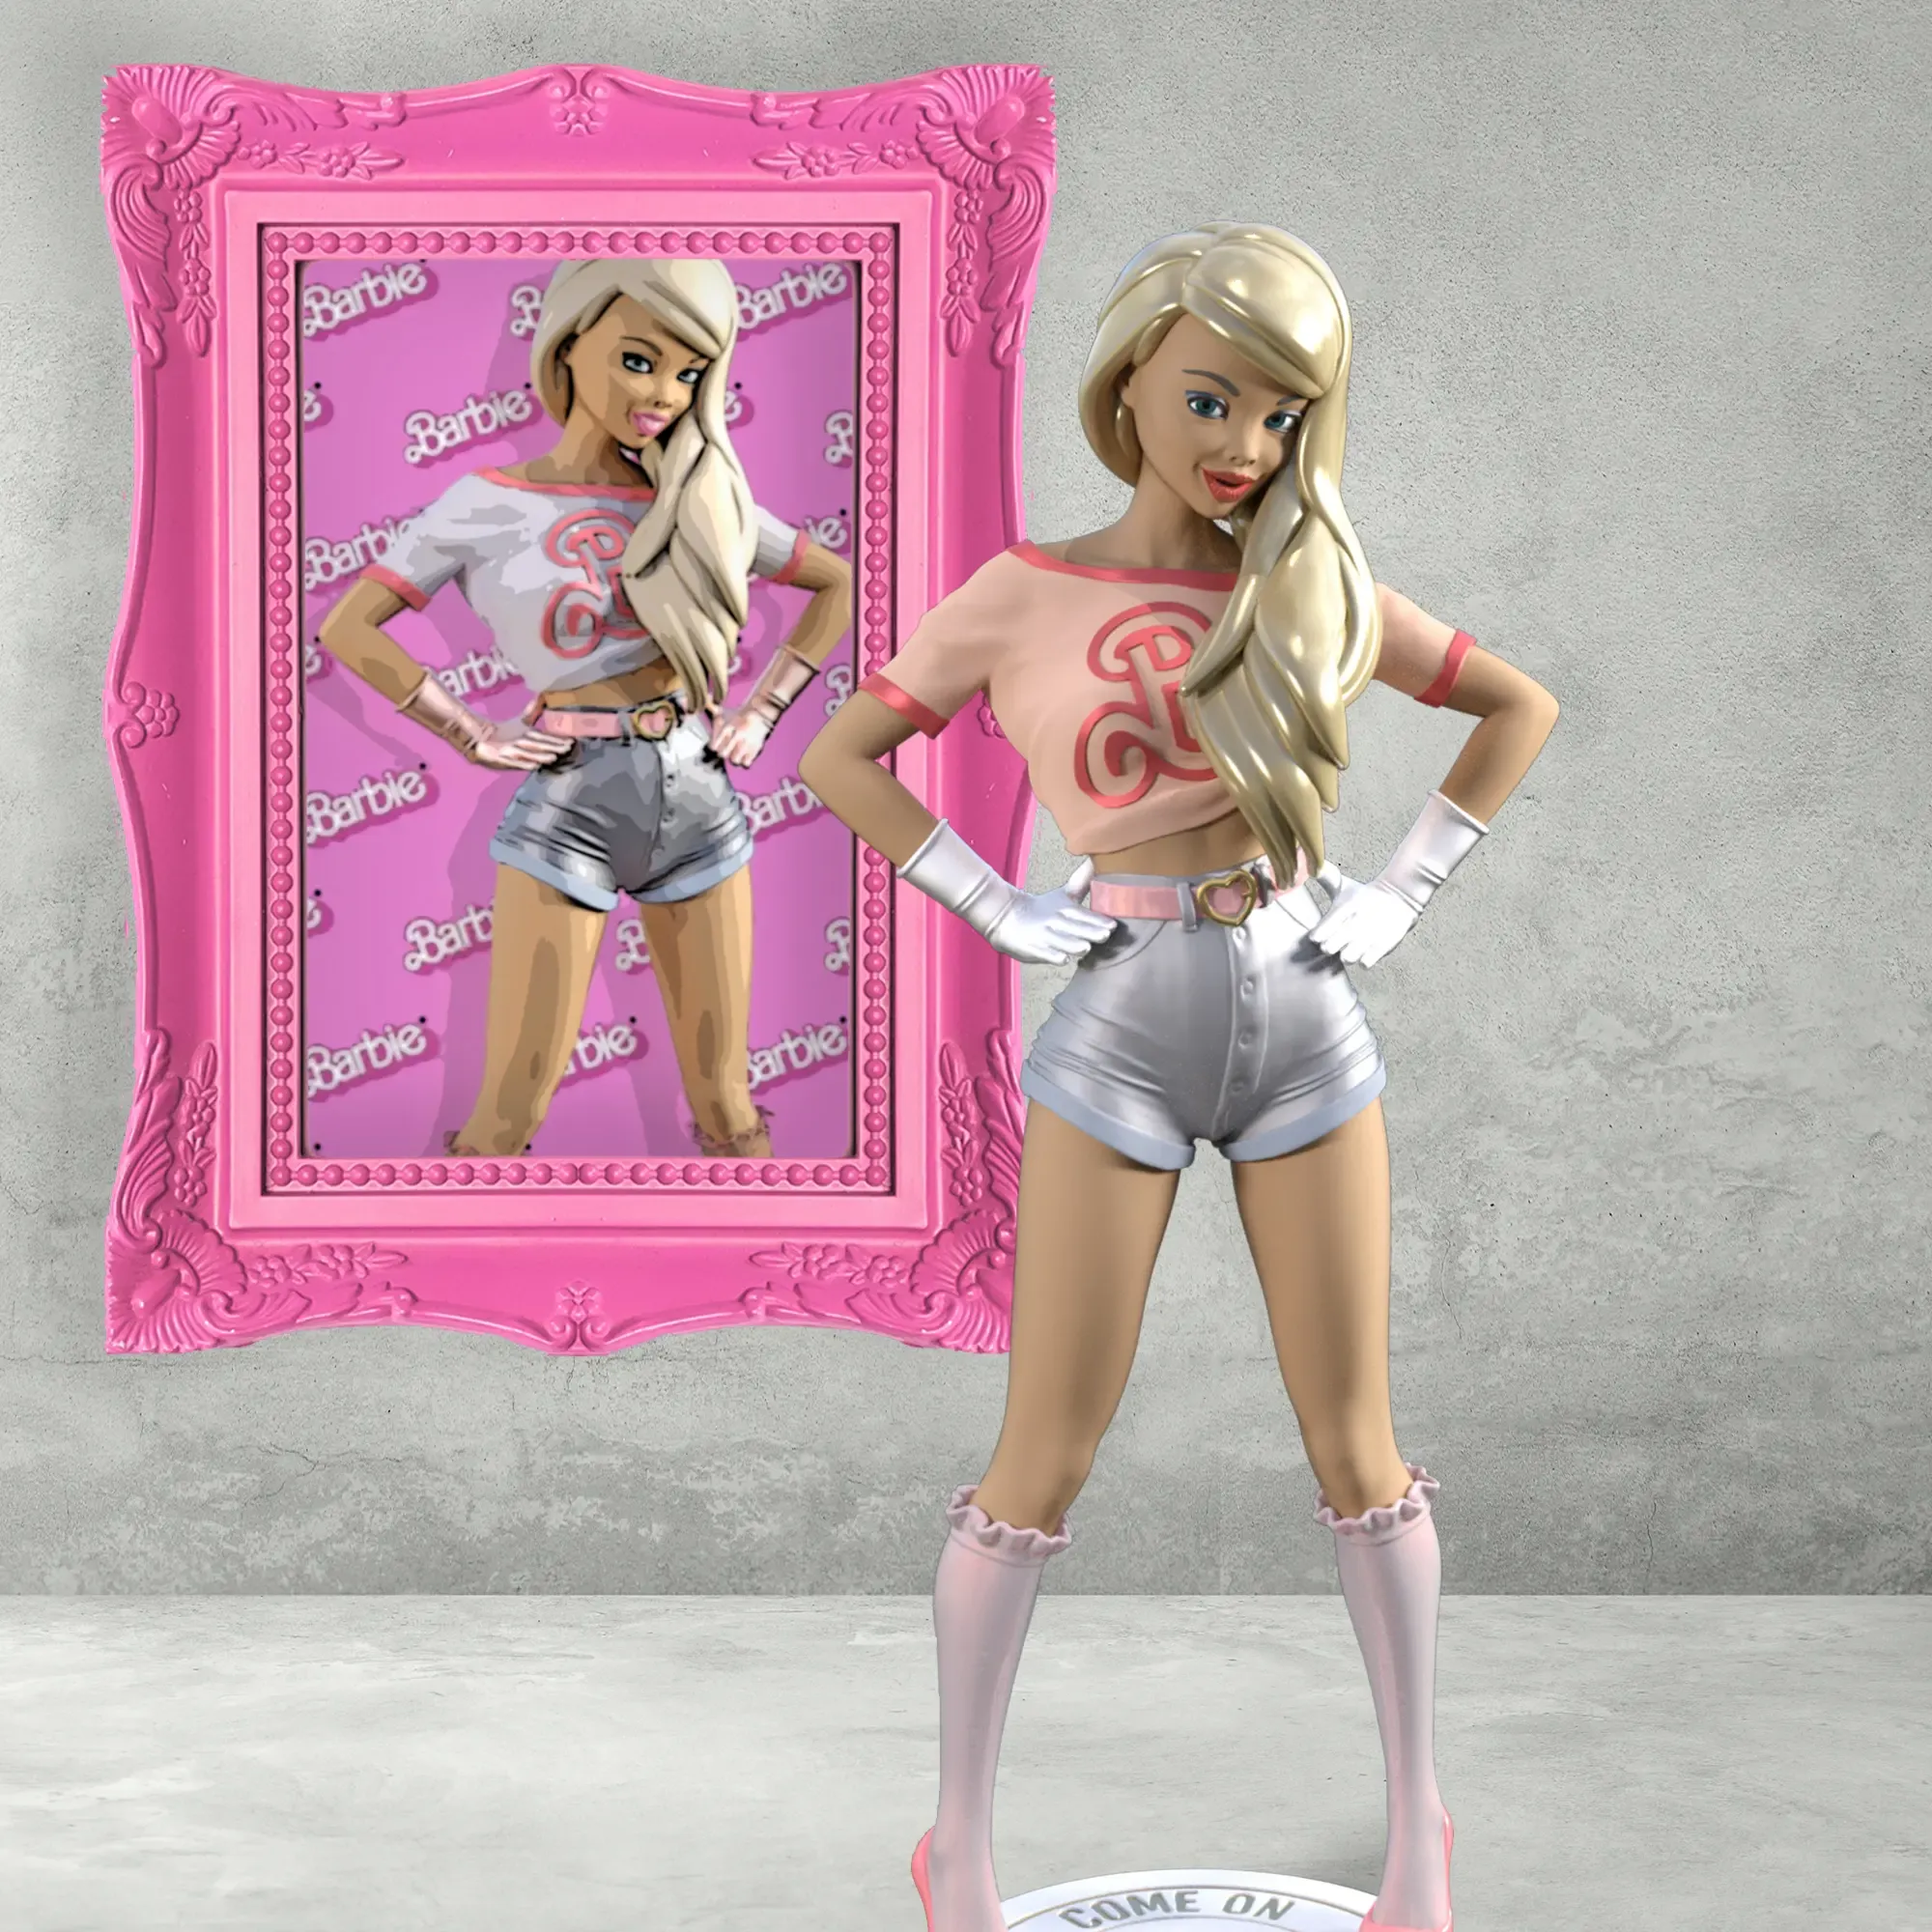 Barbie doll figurine